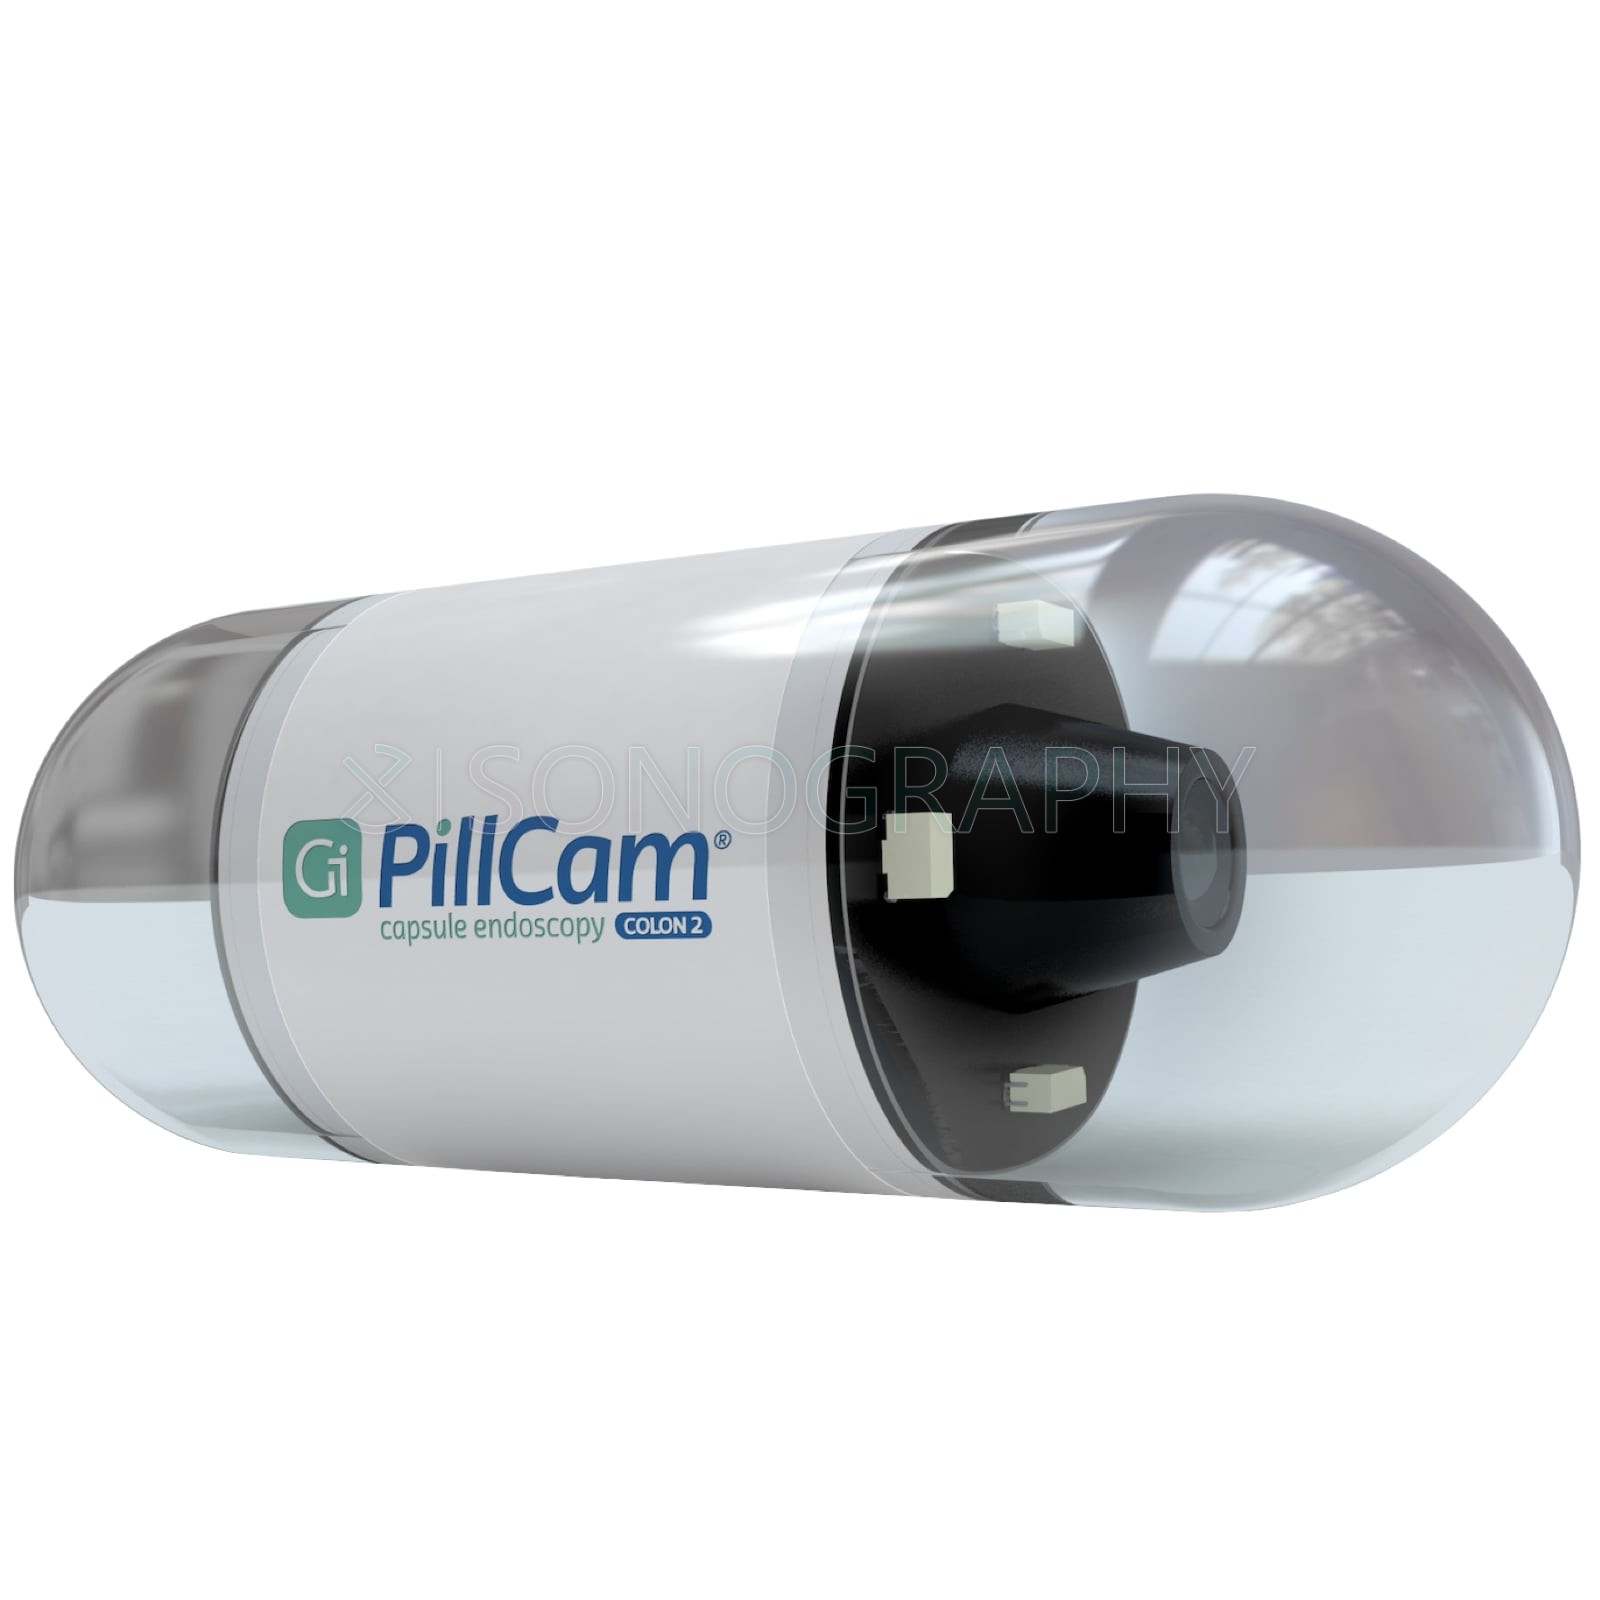 Given Imaging PillCam Colon 2